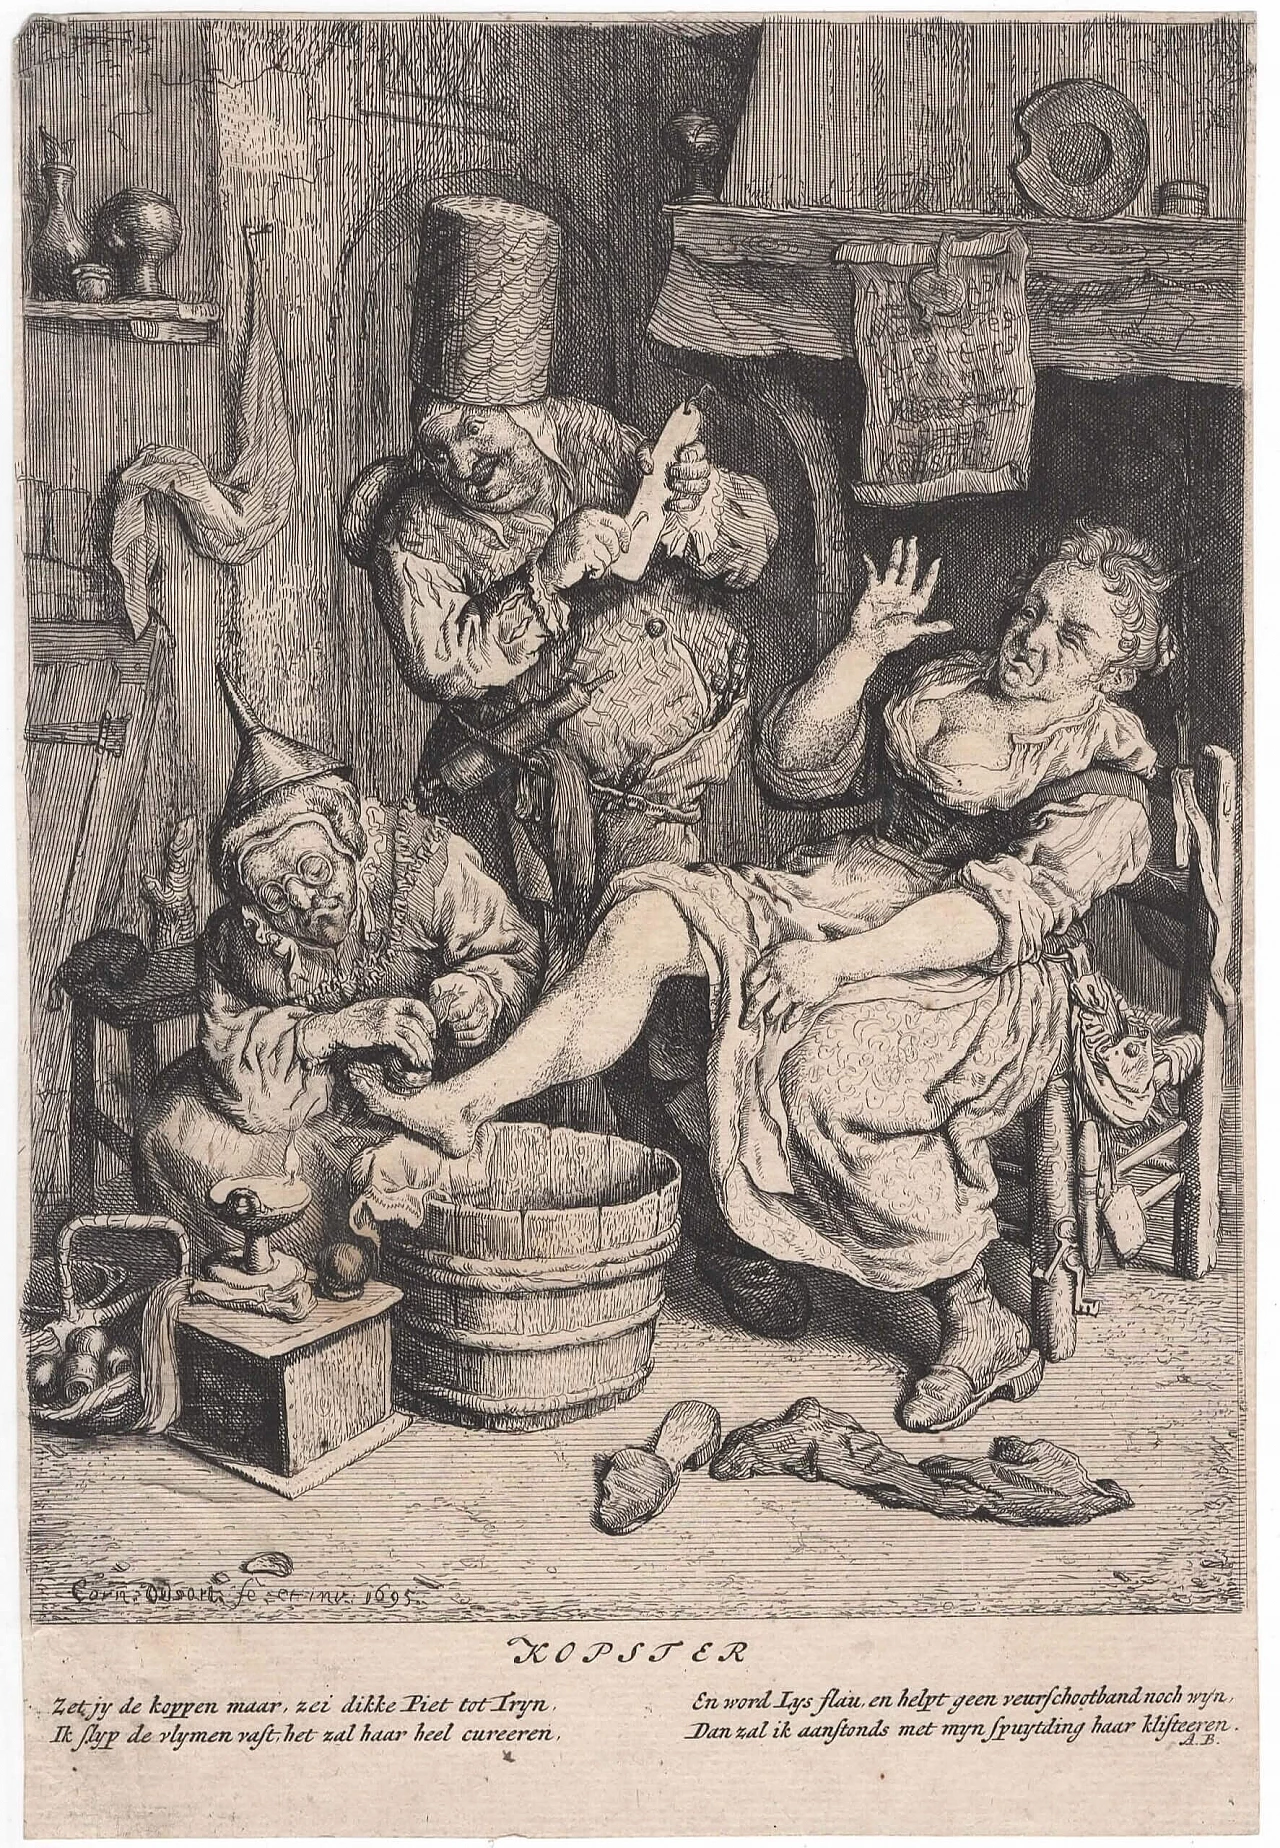 Impressione su carta di Cornelis Dusart, '700 1